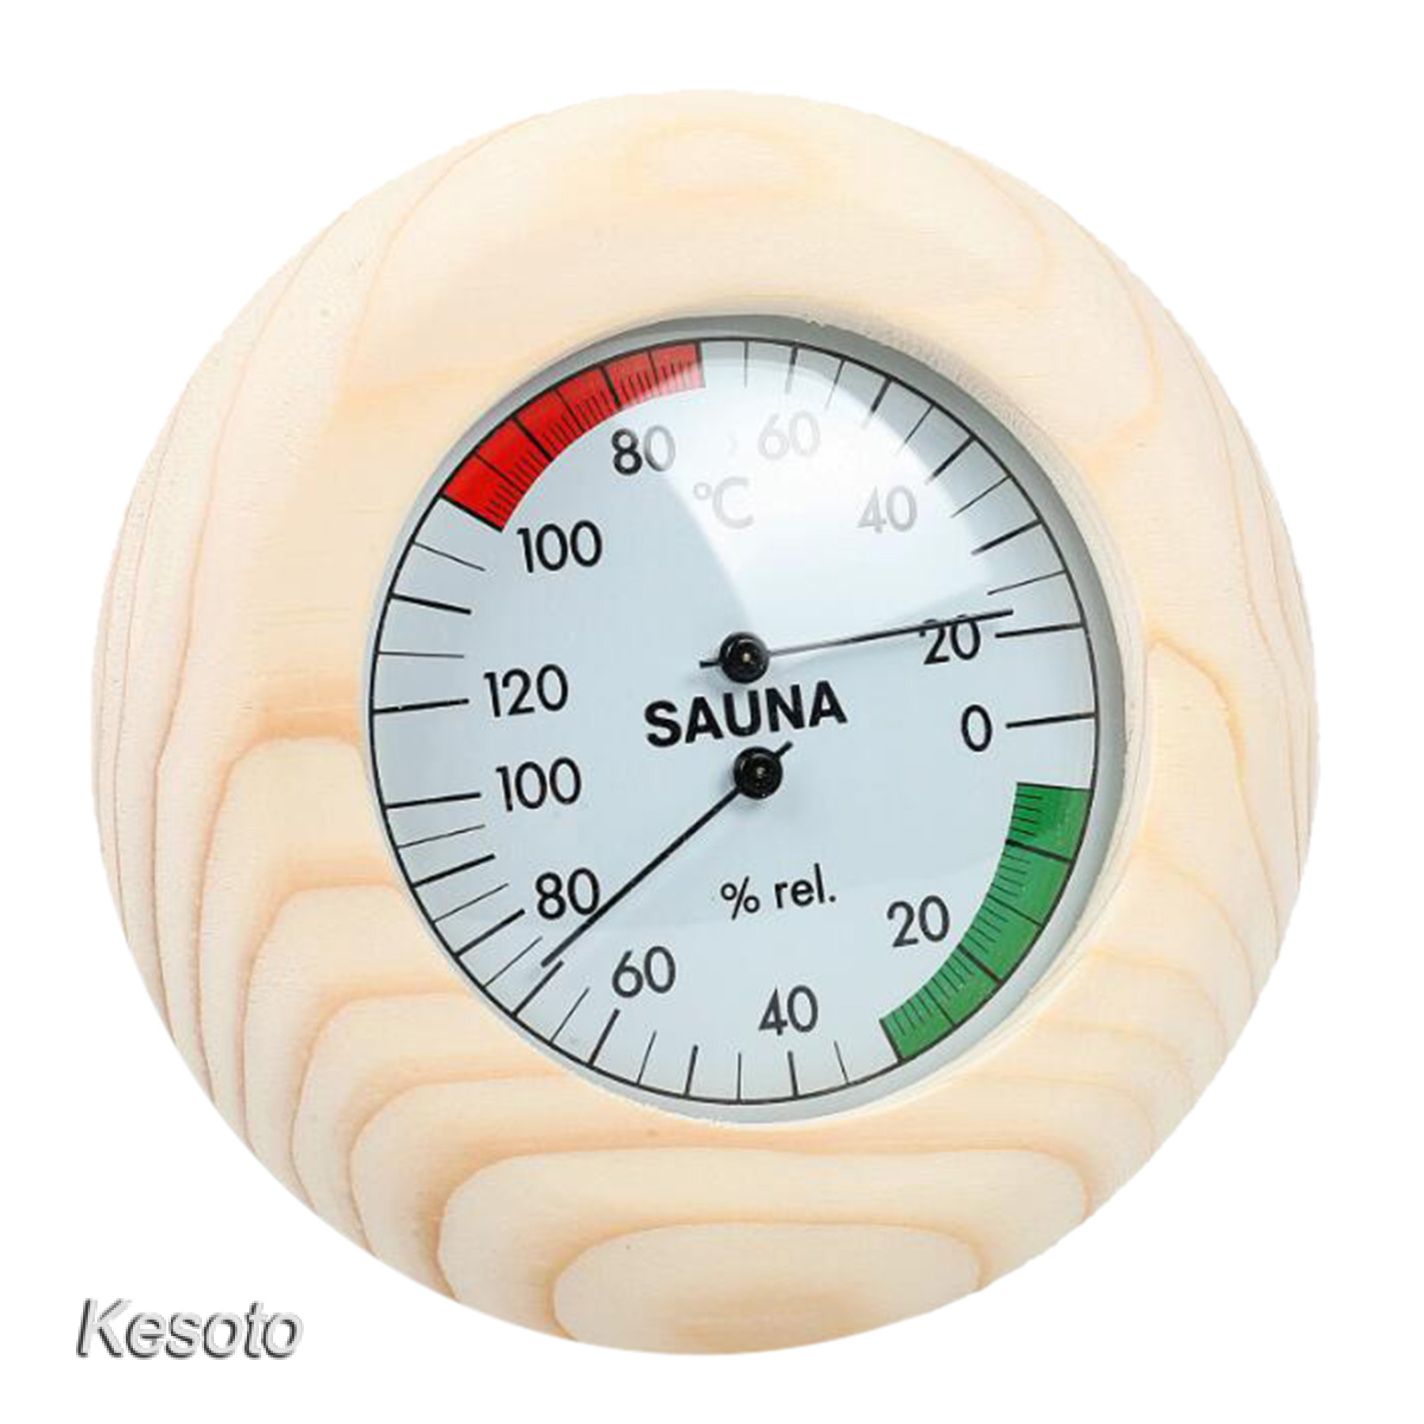 [KESOTO]Digital Sauna Wooden Hygrothermograph Thermometer & Hygrometer fpr Sauna Room